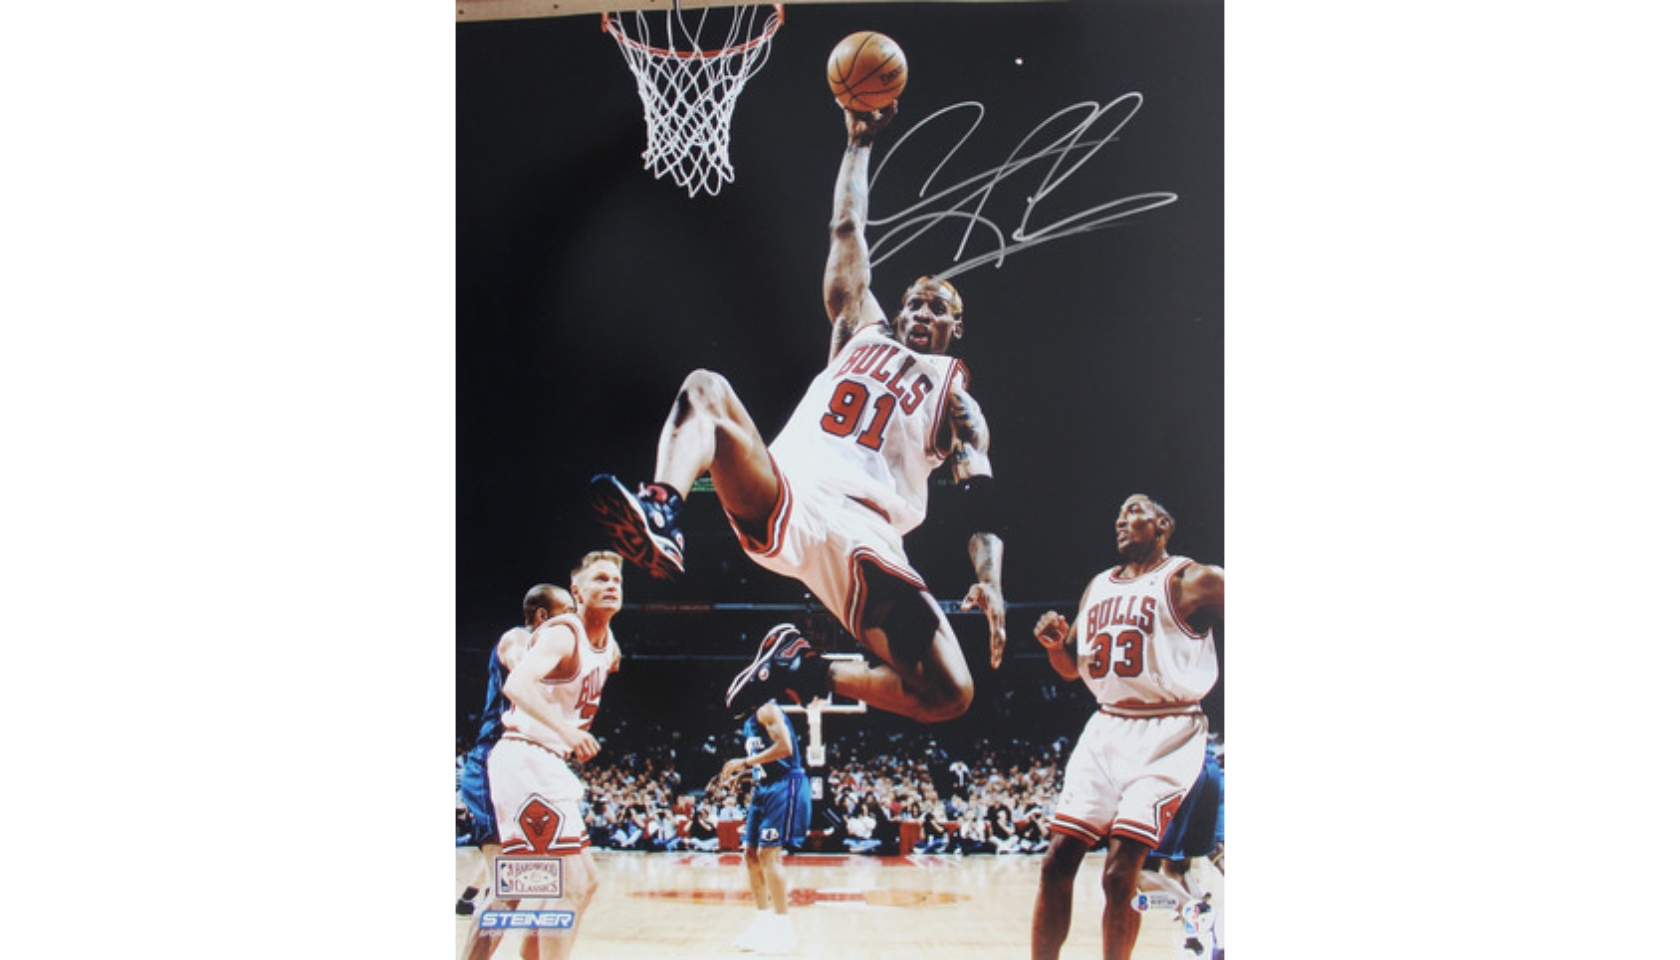 Dennis Rodman Signed Detroit Basketball Jersey - CharityStars